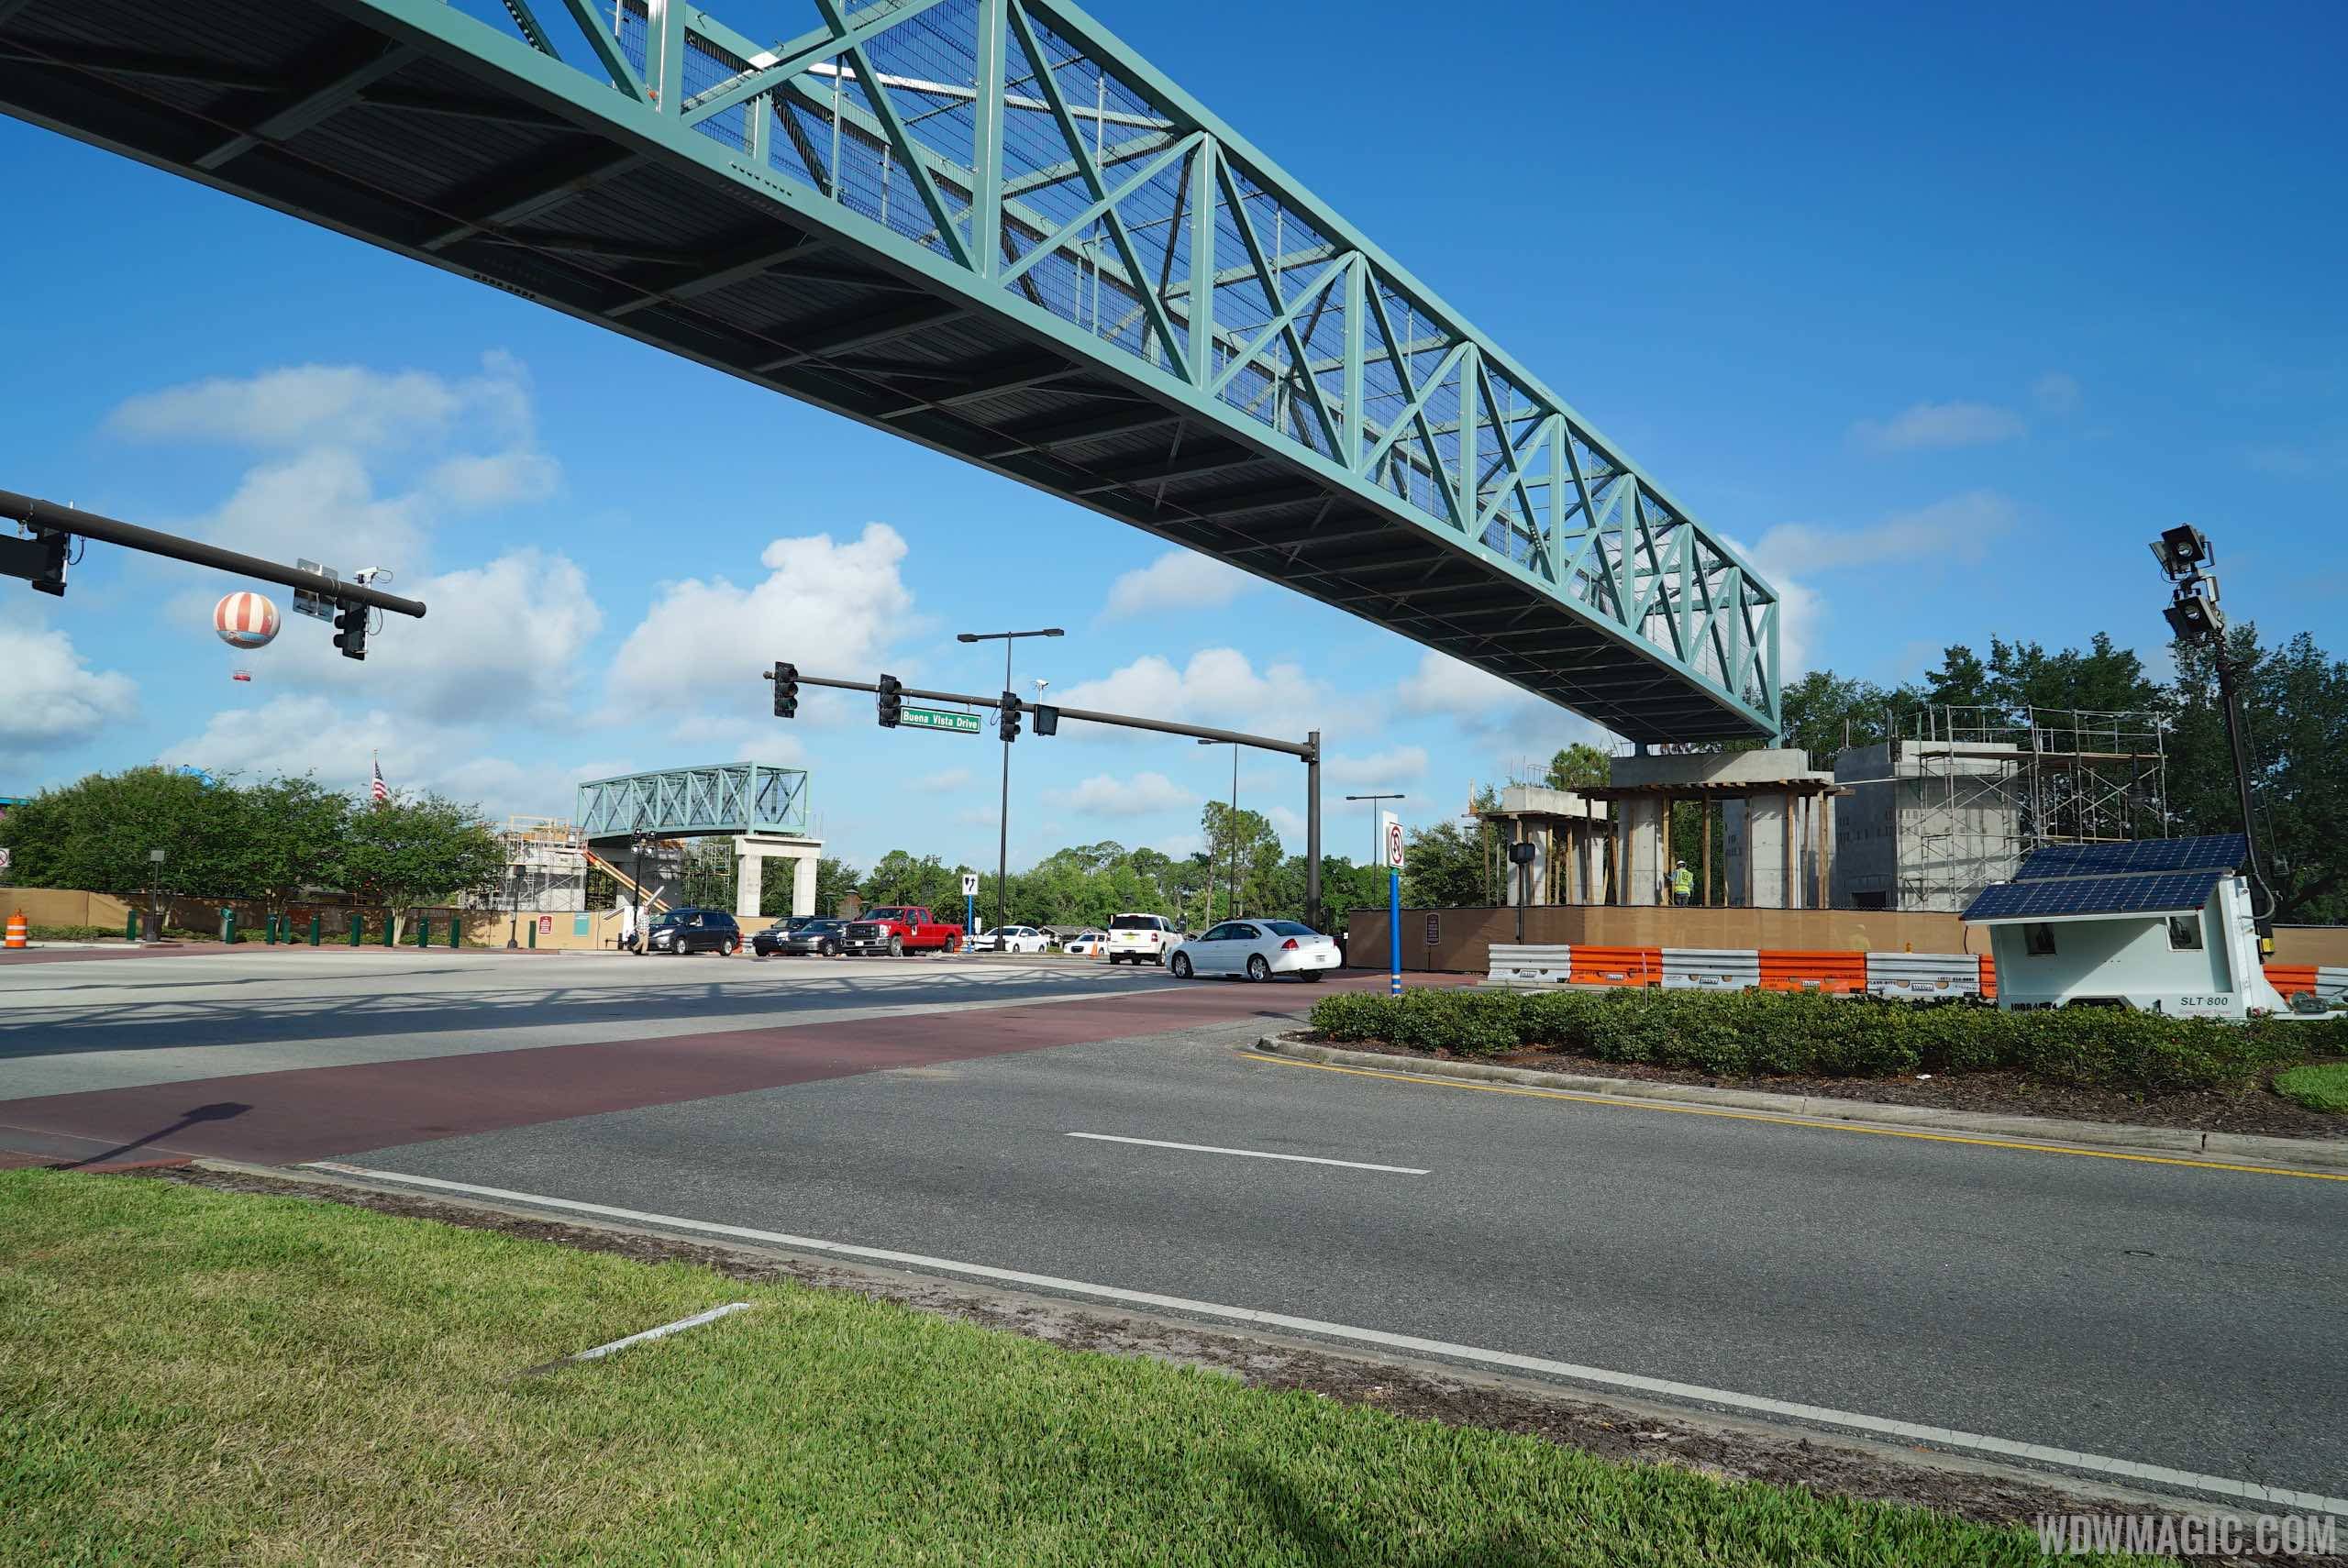 PHOTOS - Second pedestrian bridge spanning Buena Vista Drive now in place at Disney Springs